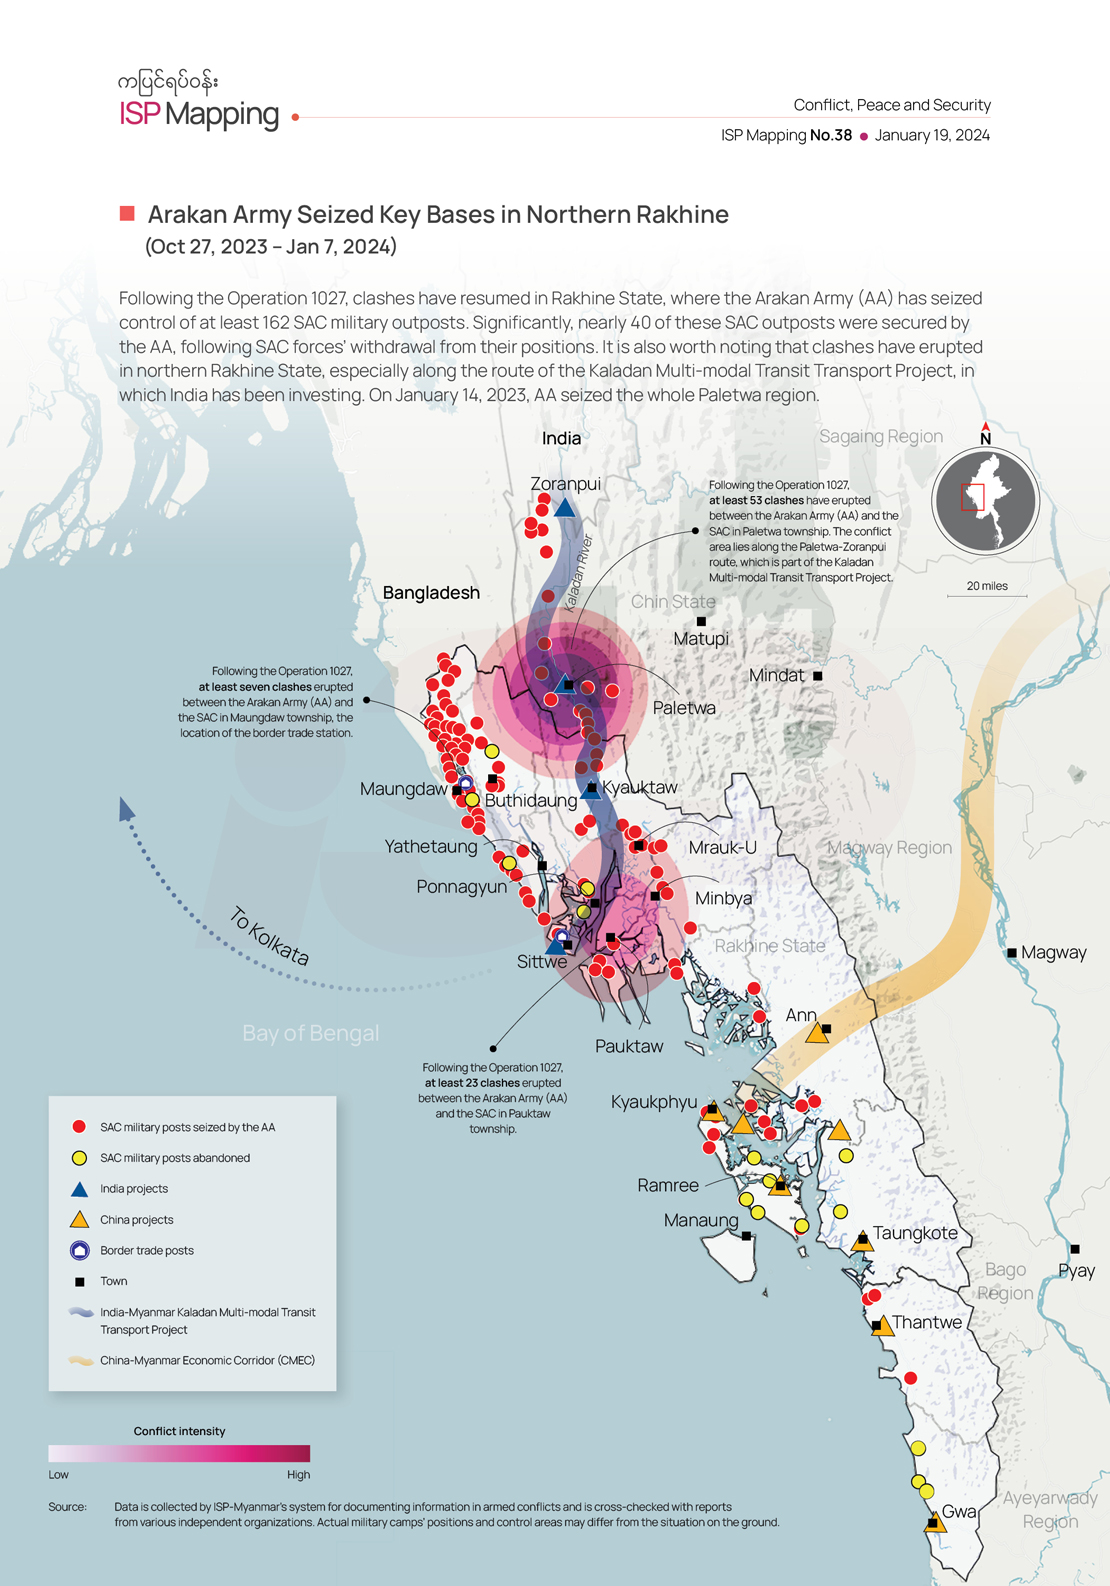 Arakan Army Seized Key Bases in Northern Rakhine